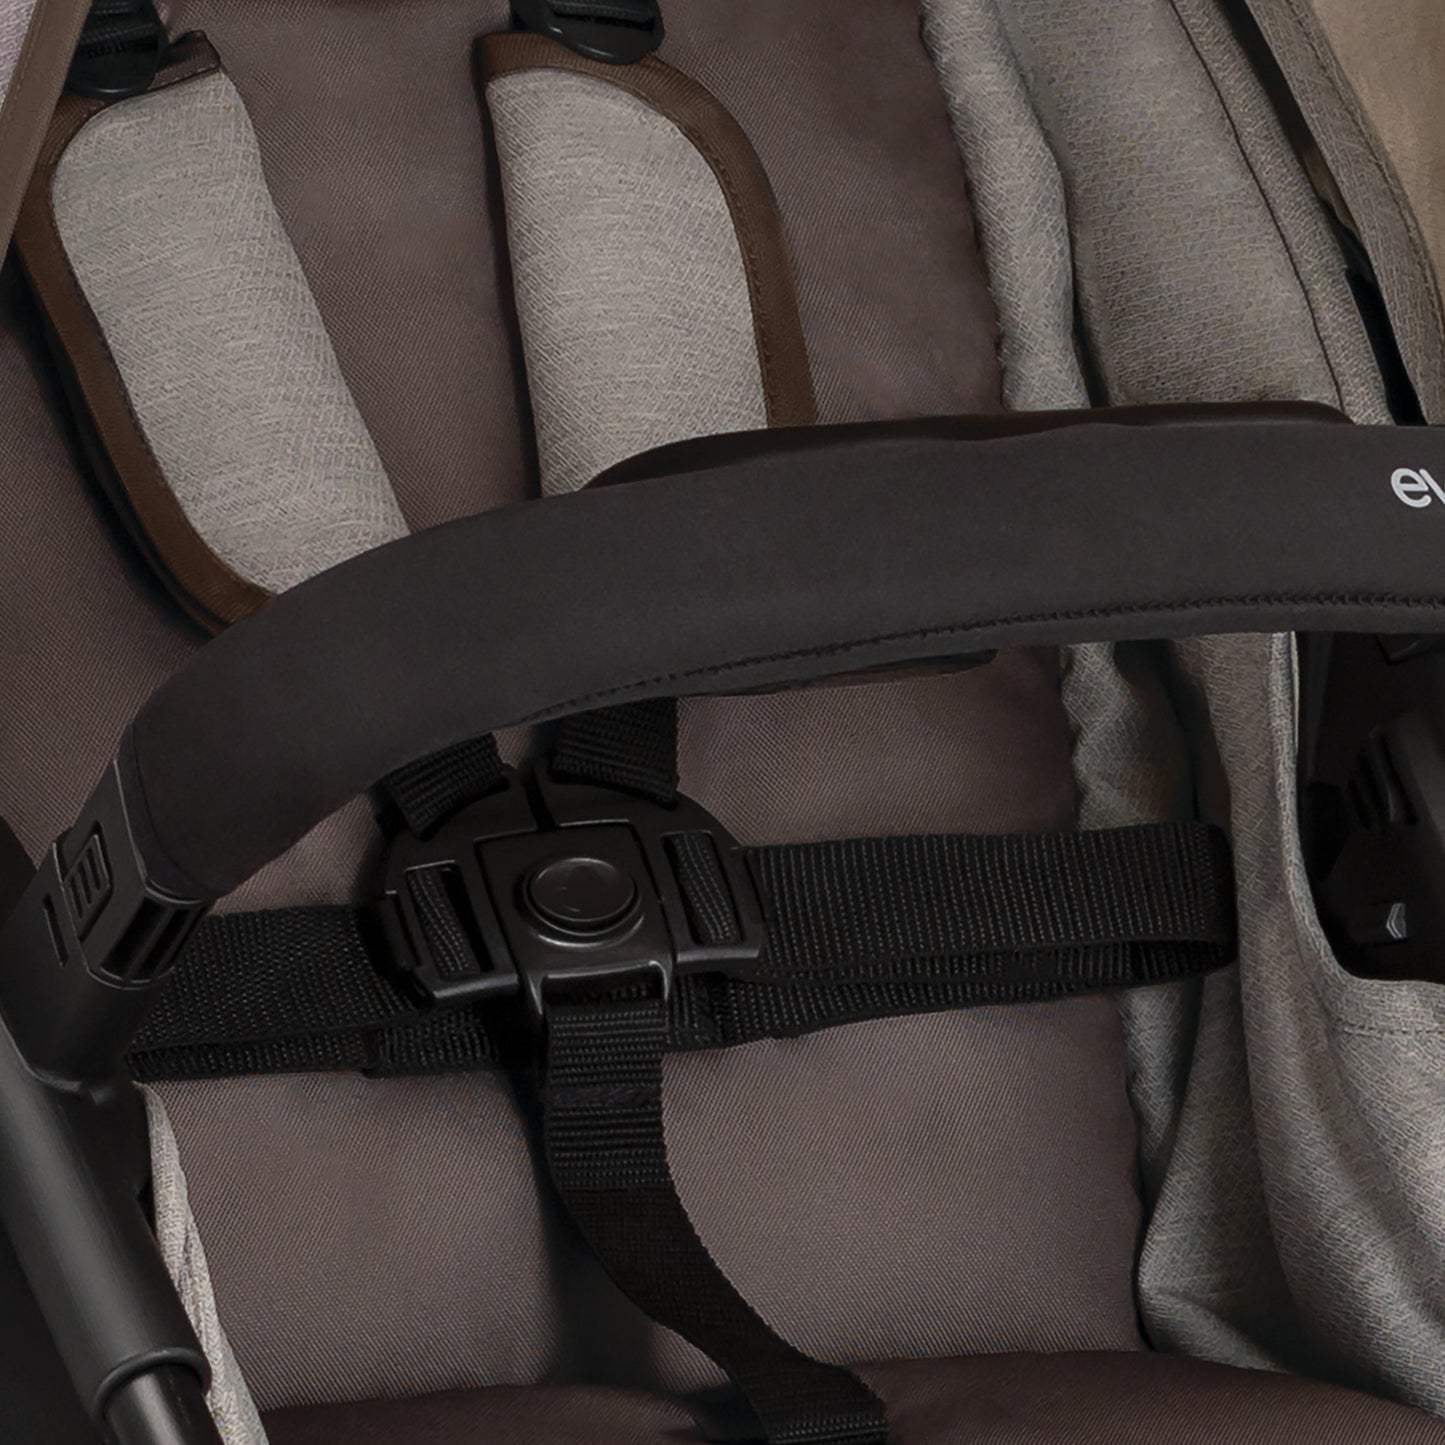 Evenflo Pivot Modular Travel System with LiteMax Infant Car Seat with Anti-Rebound Bar (Desert Tan)